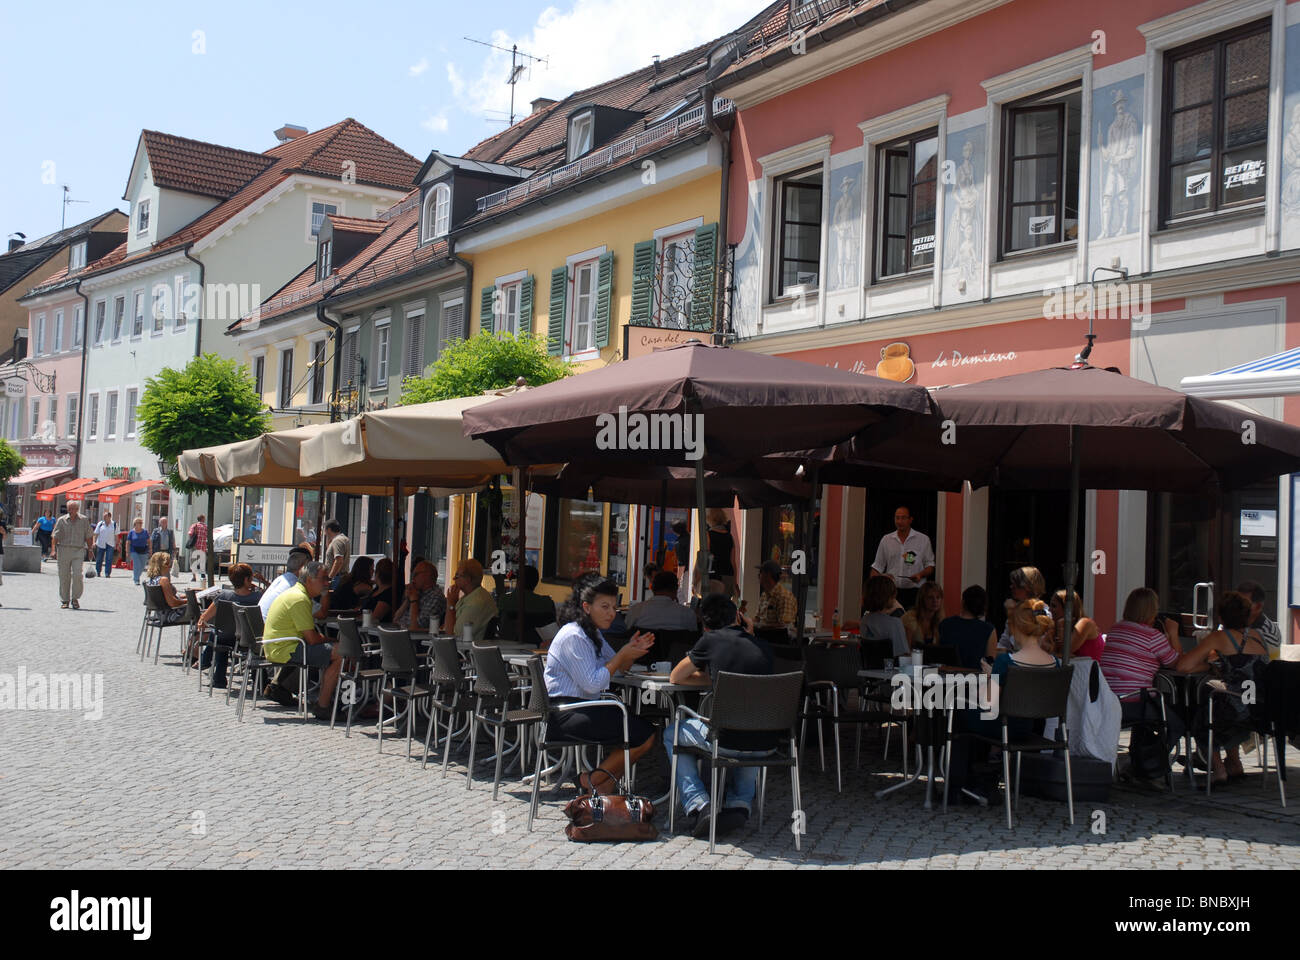 outdoor cafe / restaurant on teh main street of Murnau am Staffelsee, Garmisch-Partenkirchen, Oberbayern, Bavaria, Germany Stock Photo